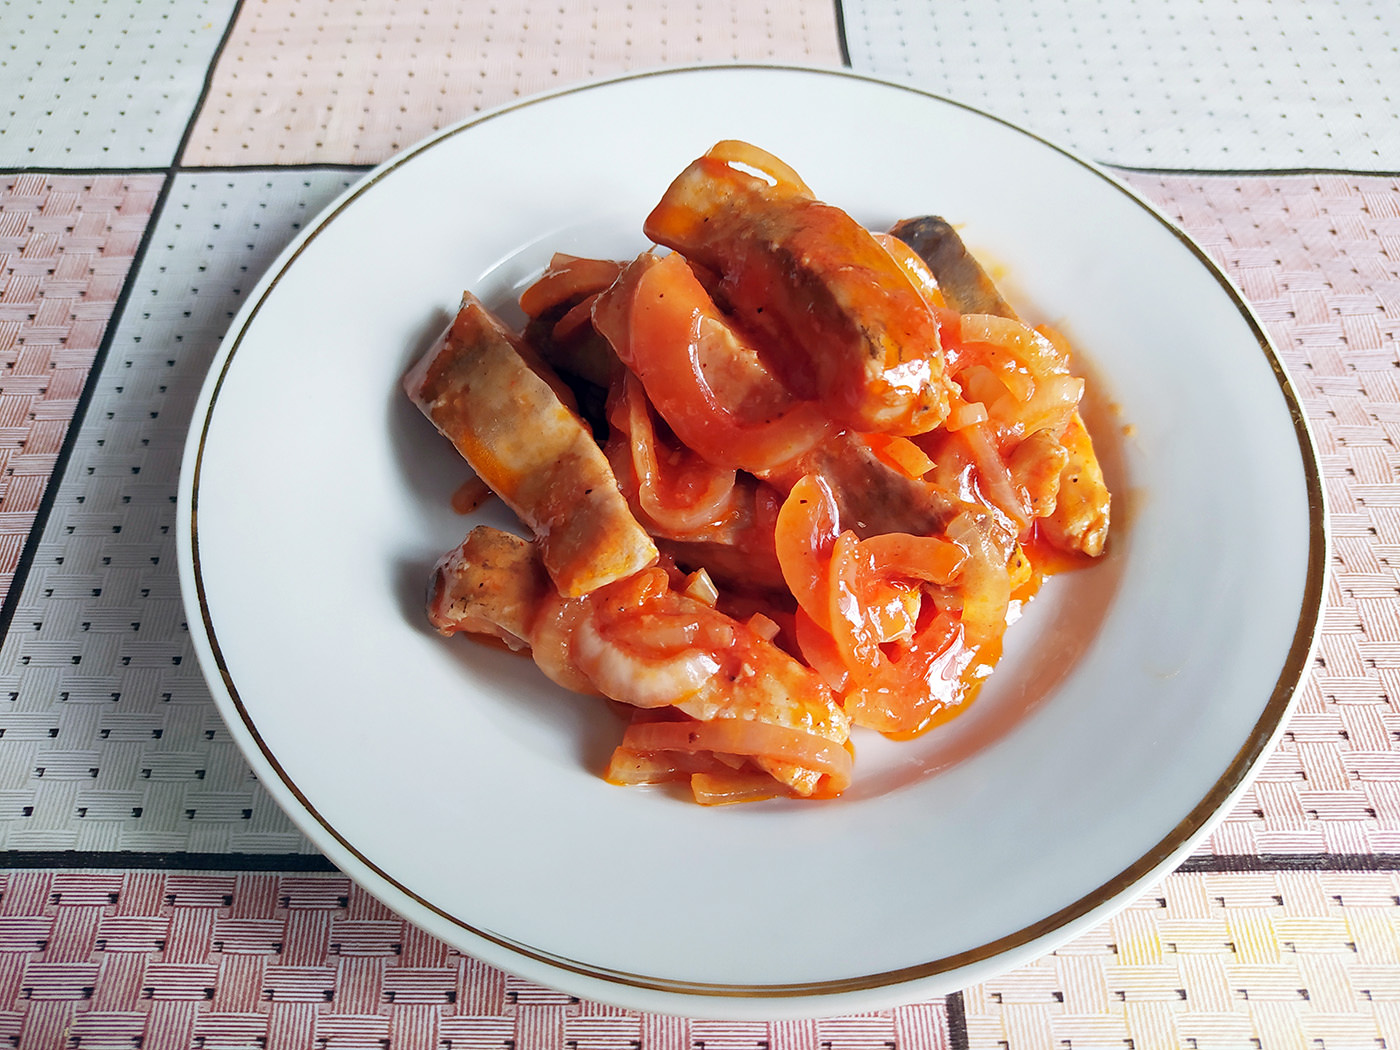 Салат по-корейски из тыквы и моркови